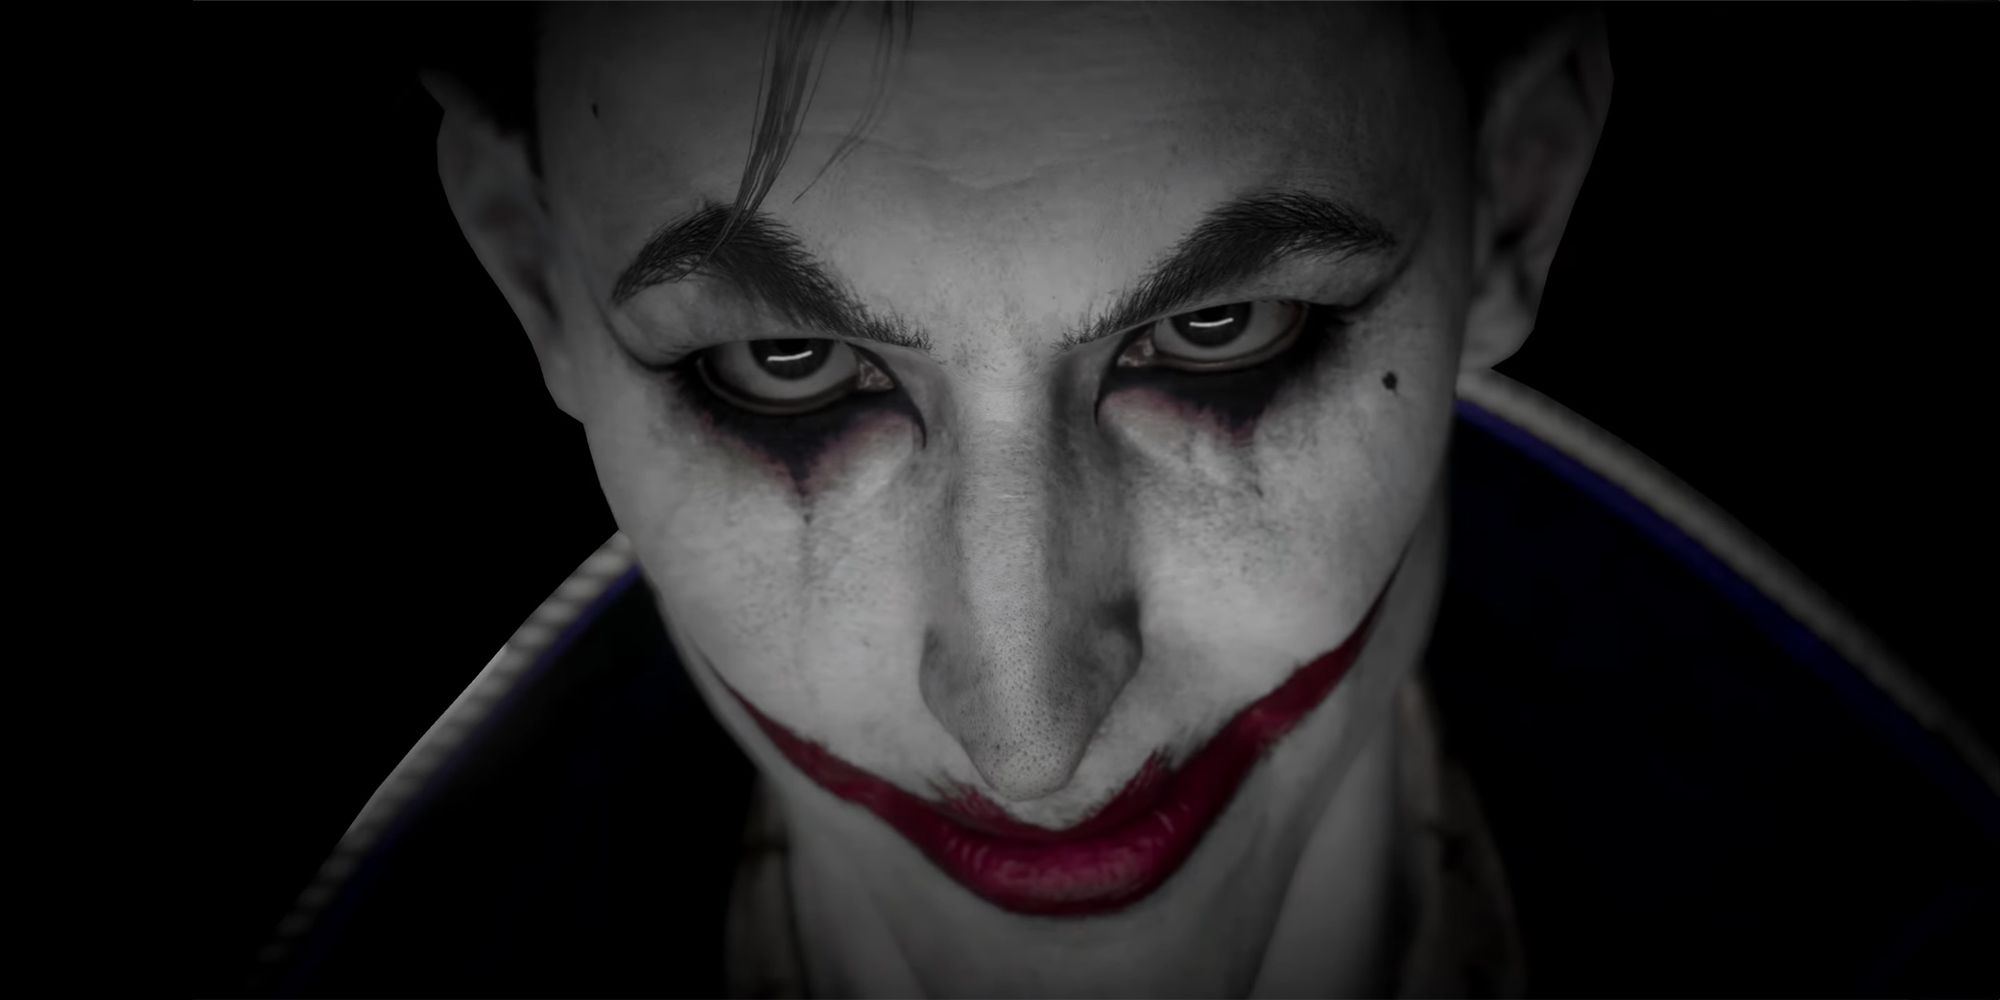 Joker intense stare